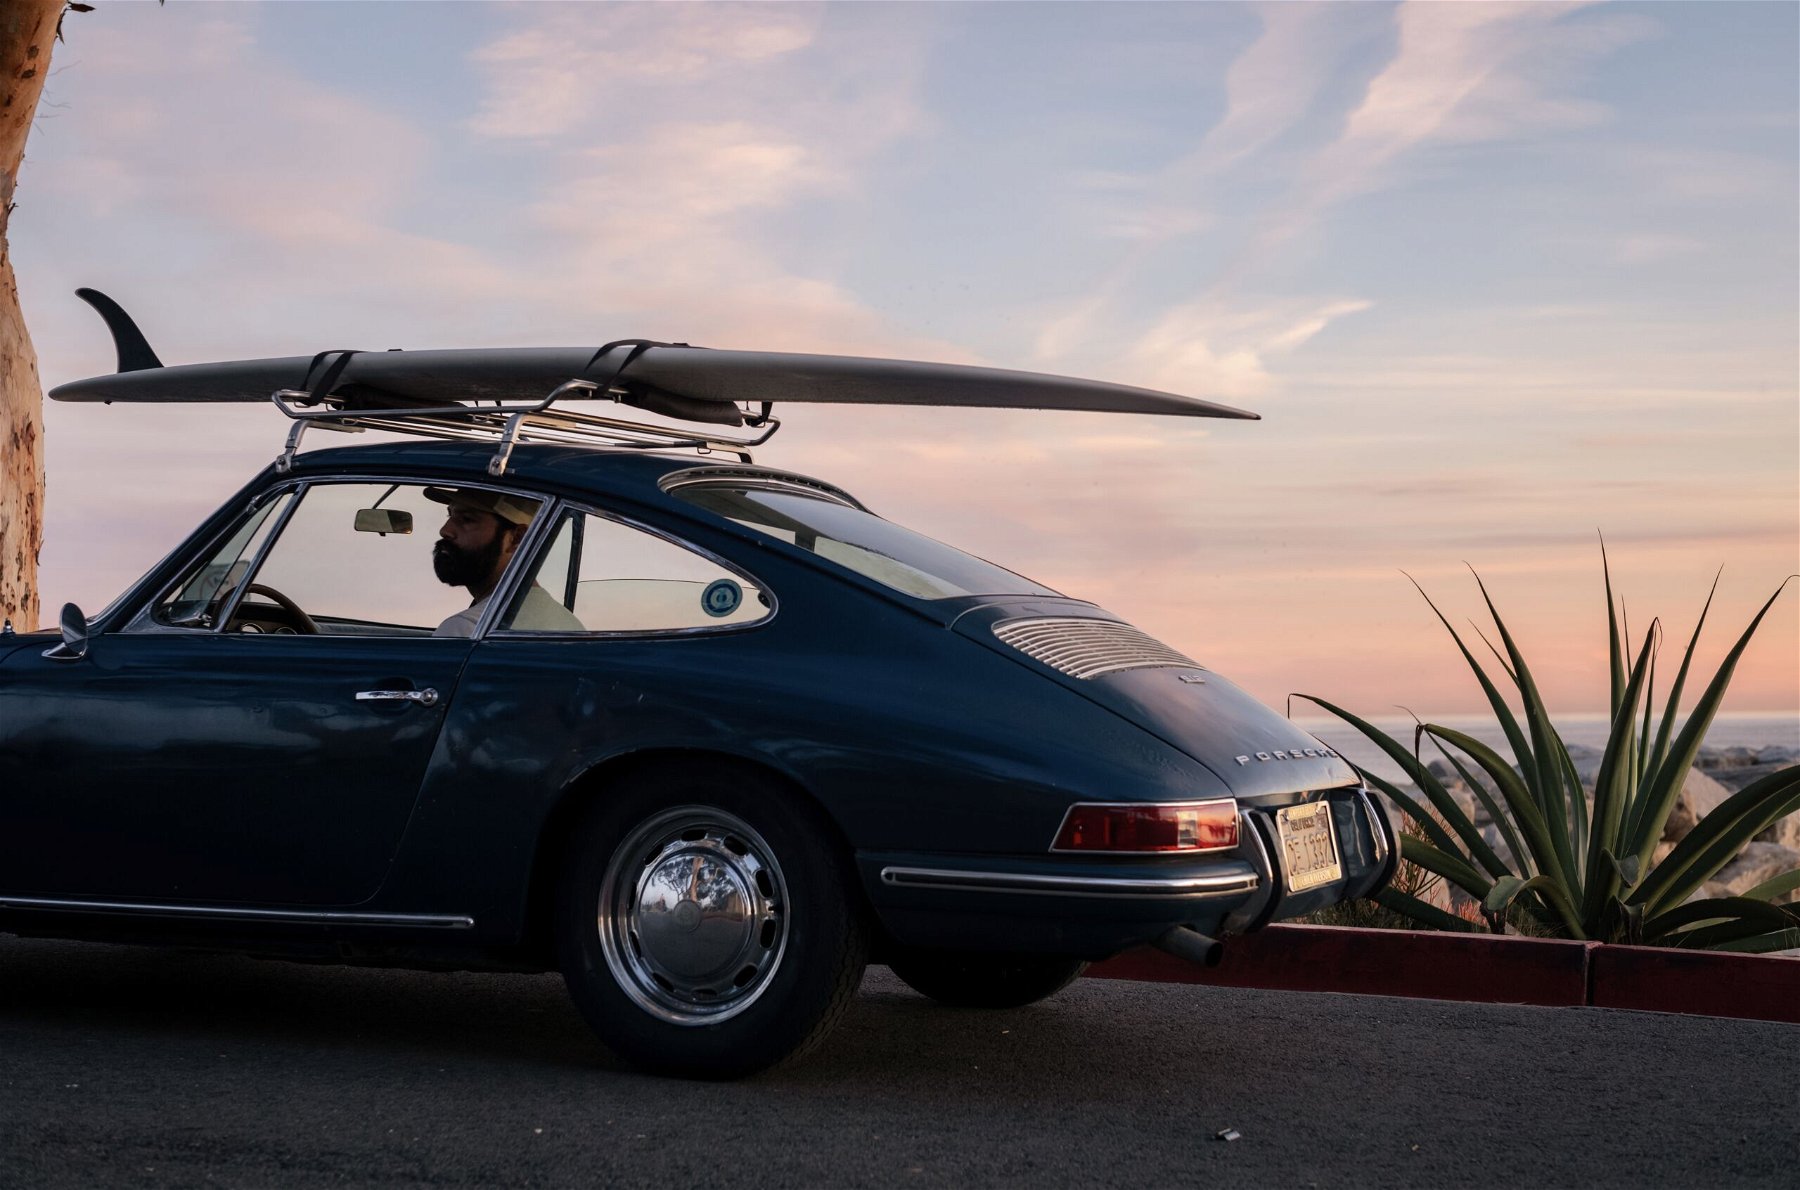 Aaron Ashton's Aga blue Porsche 912 in the californian sunset